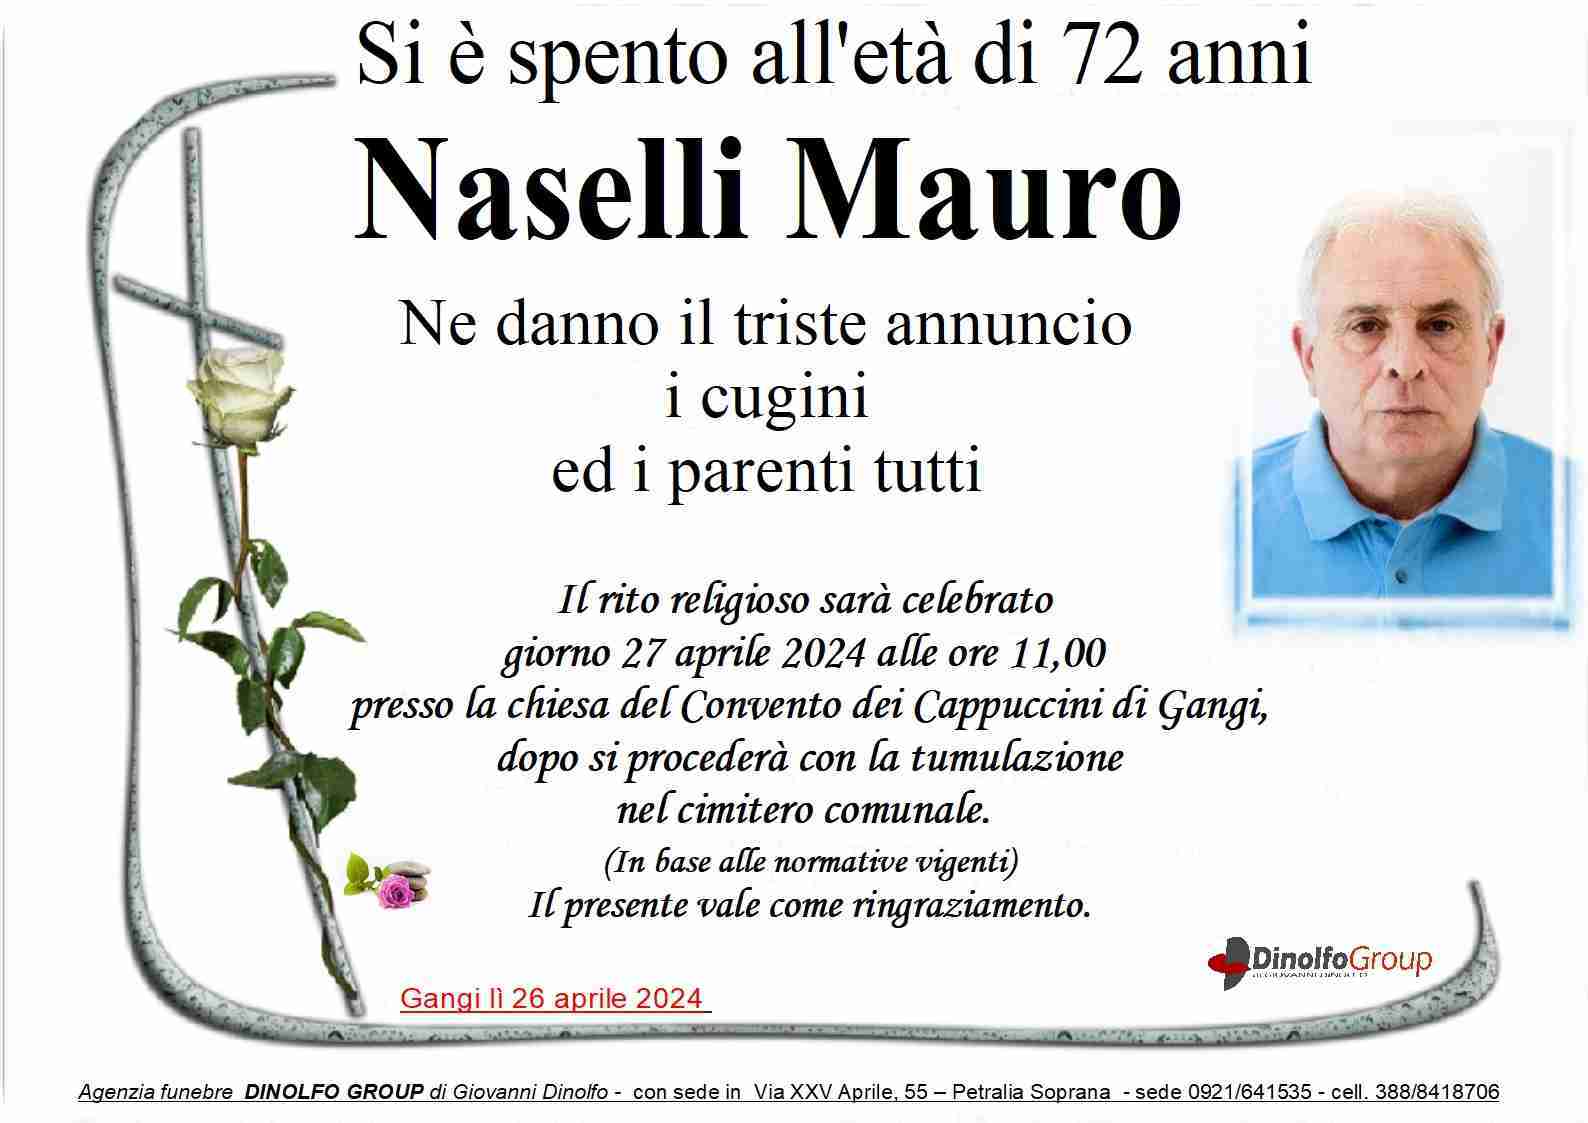 Mauro Naselli